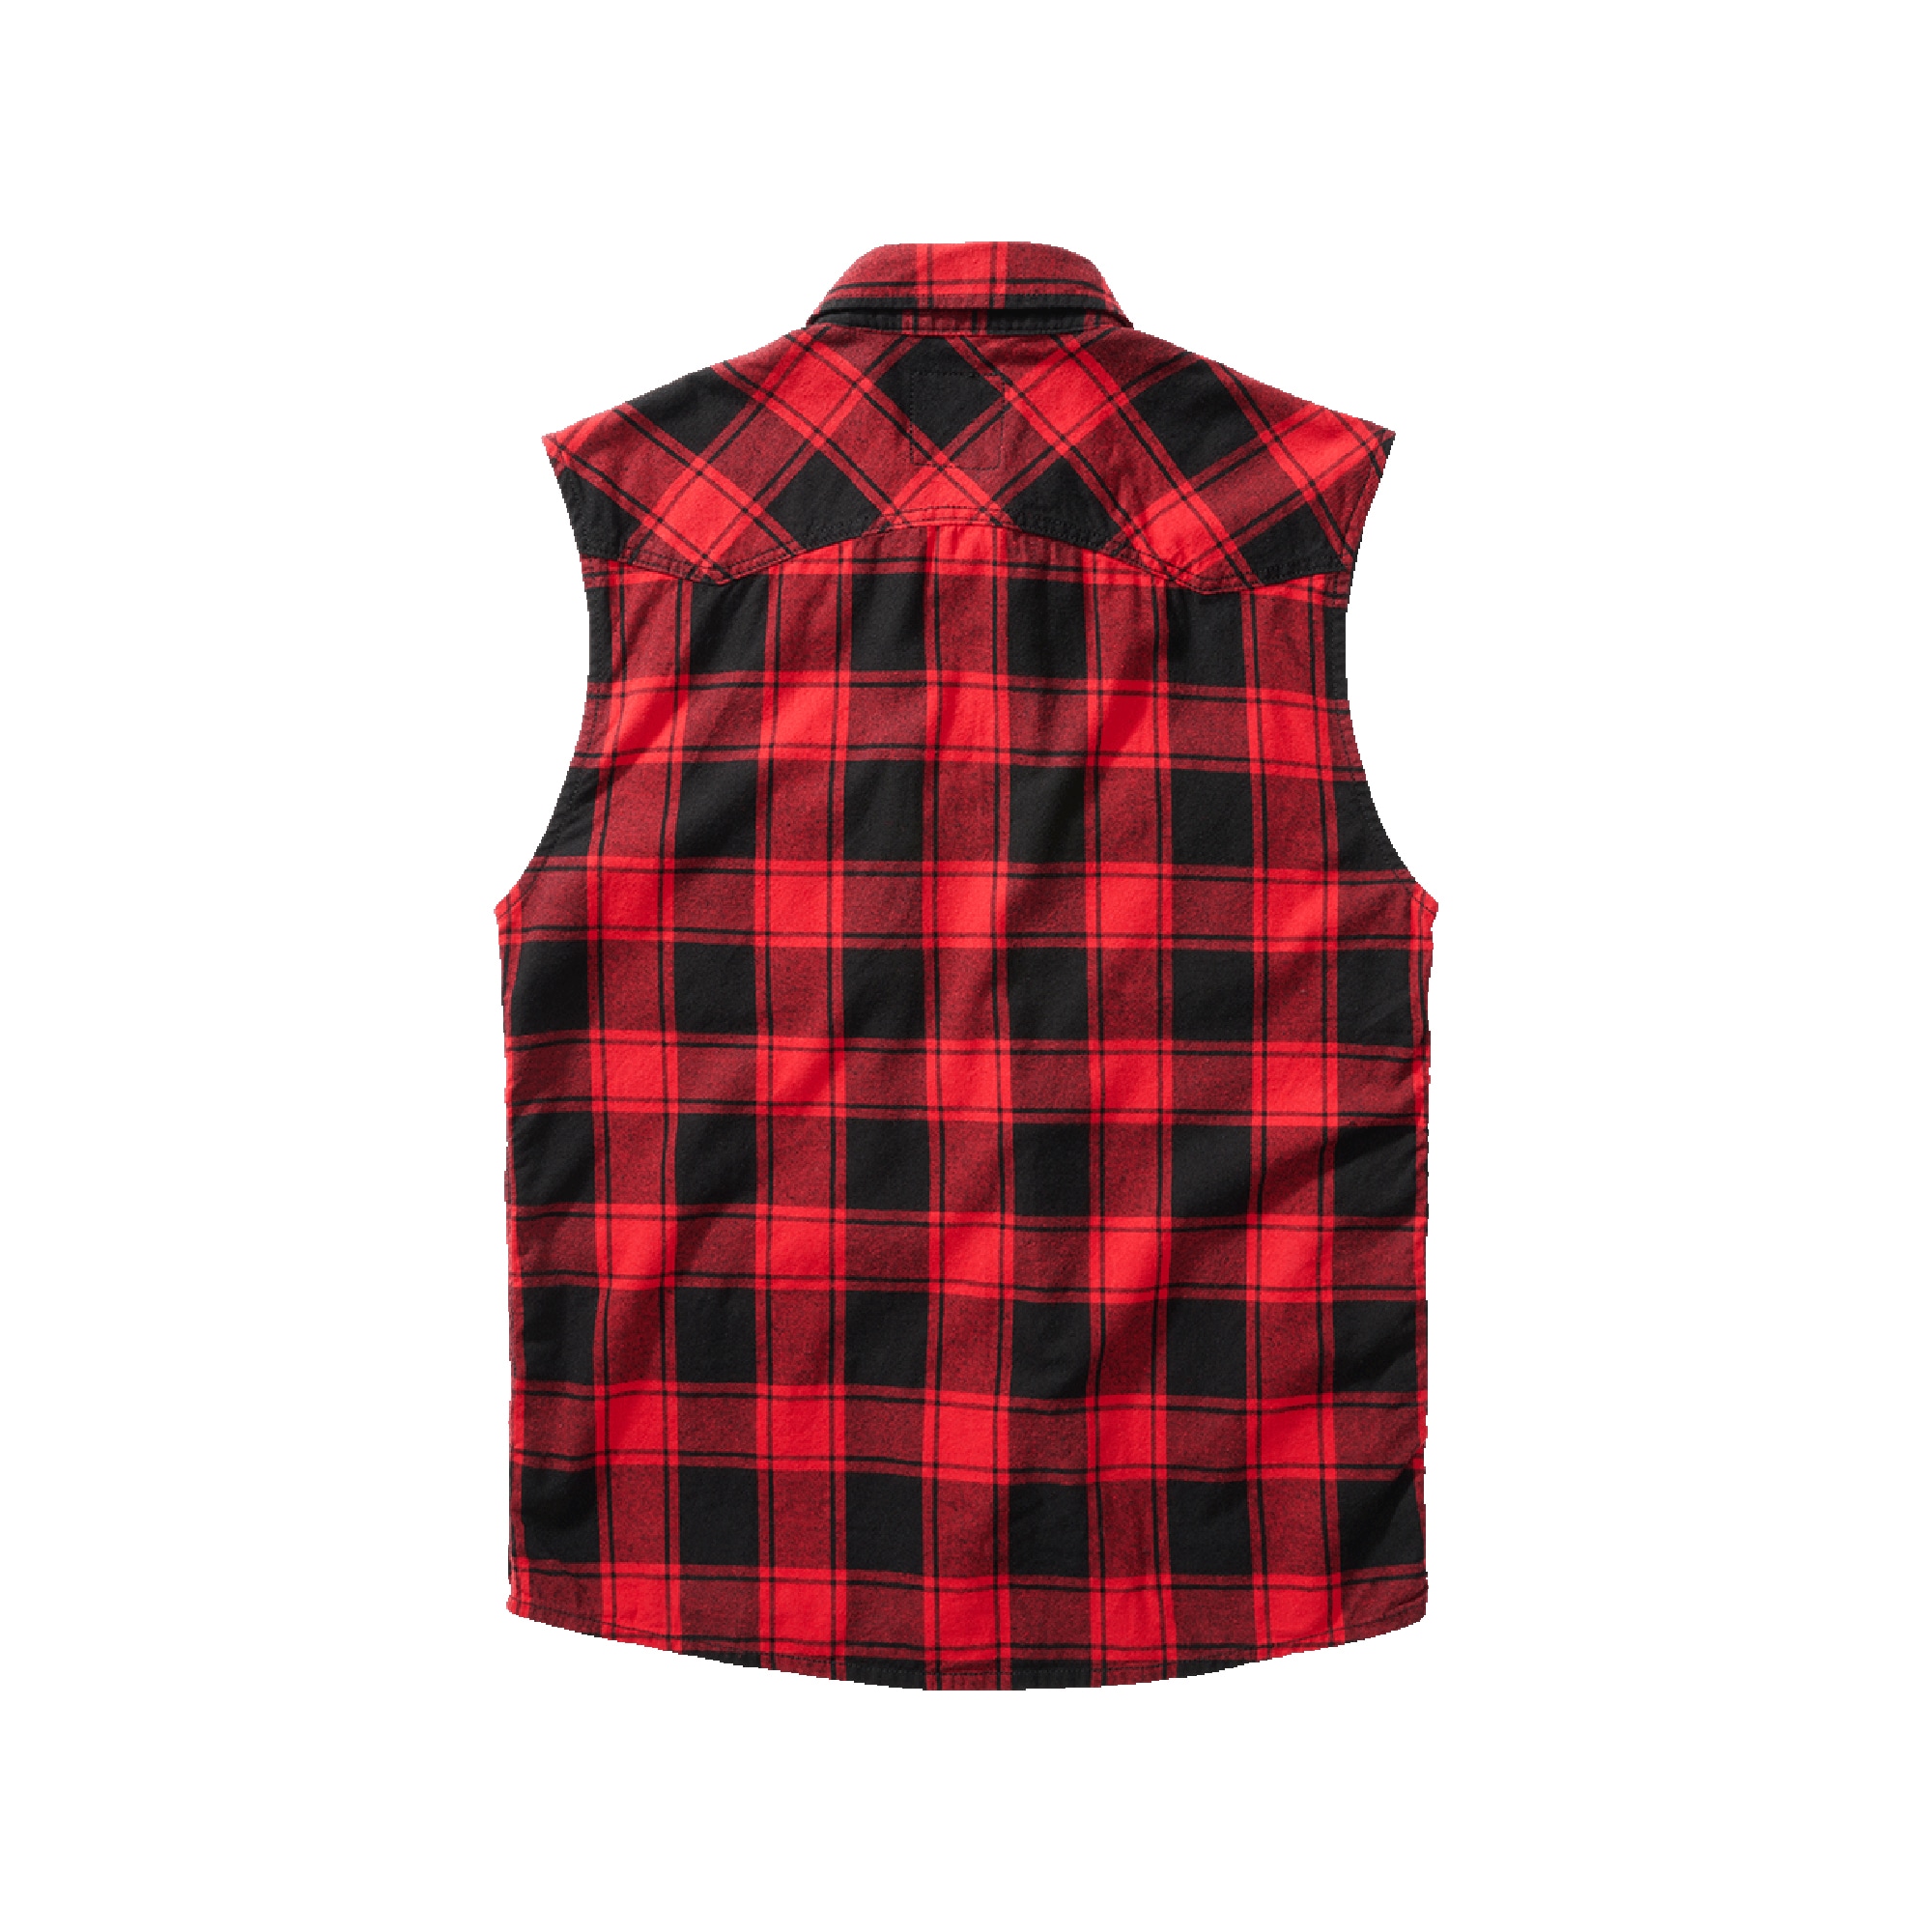 Shirt Check ASMC red/black Purchase the by Brandit Sleeveless